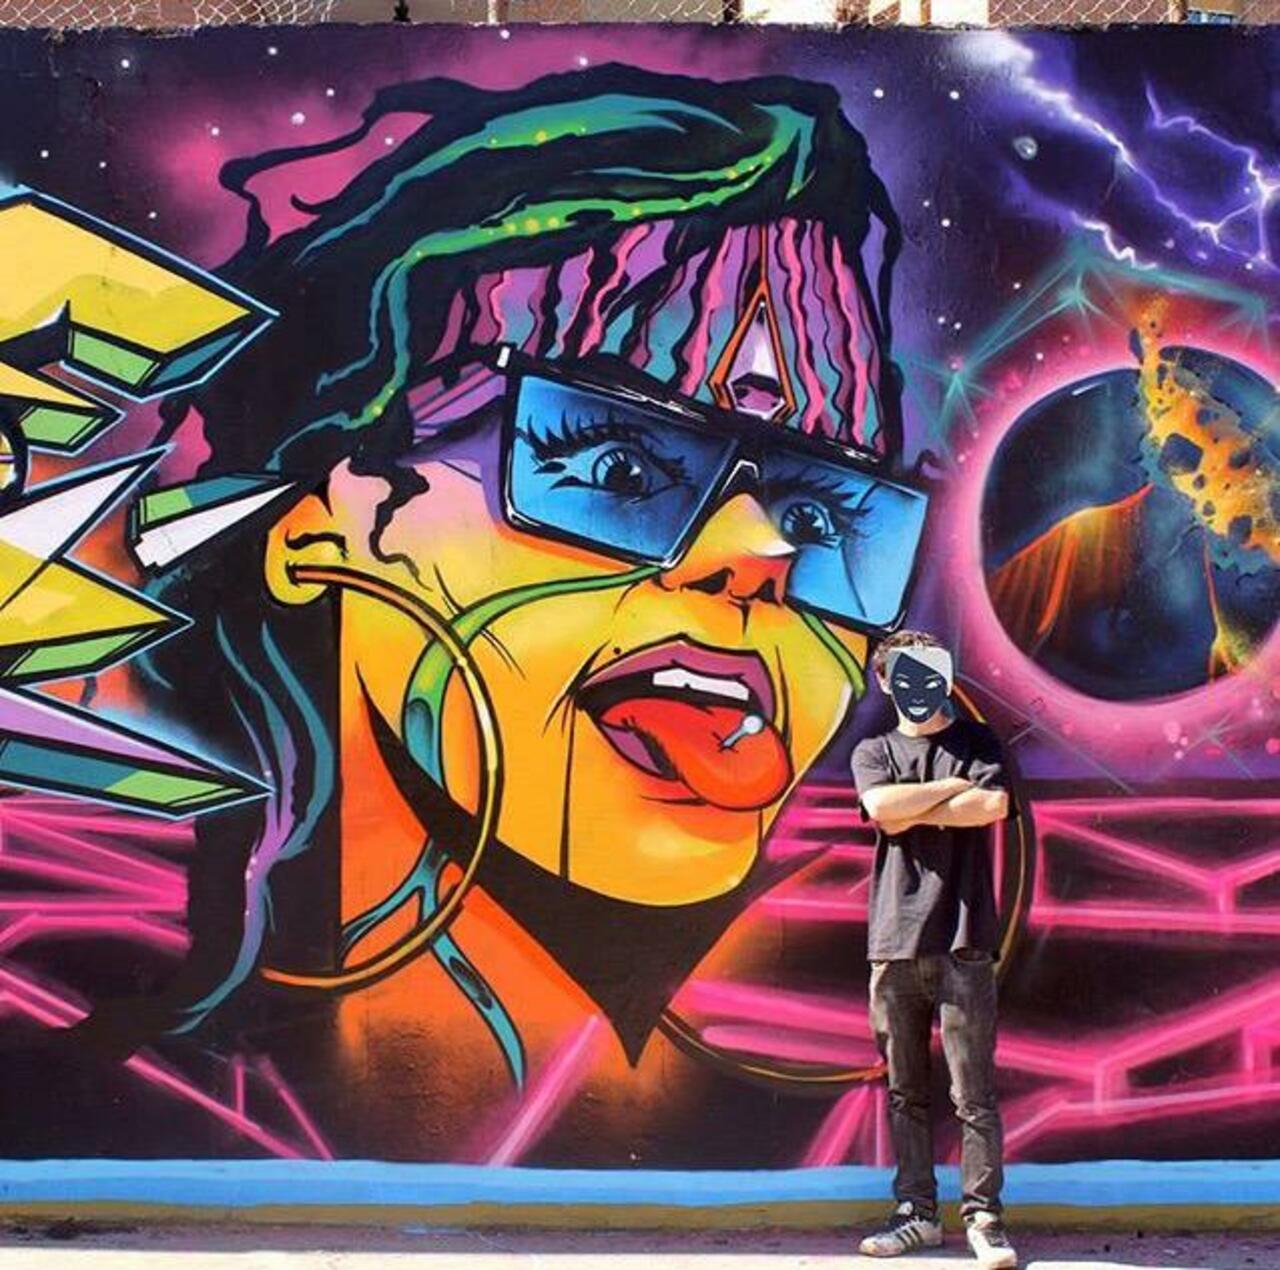 RT @BenWest: RT @12Elena27: Brilliant new Street Art by the artist Jaycaes

#art #graffiti #mural #streetart http://t.co/JFdKrIqbSC